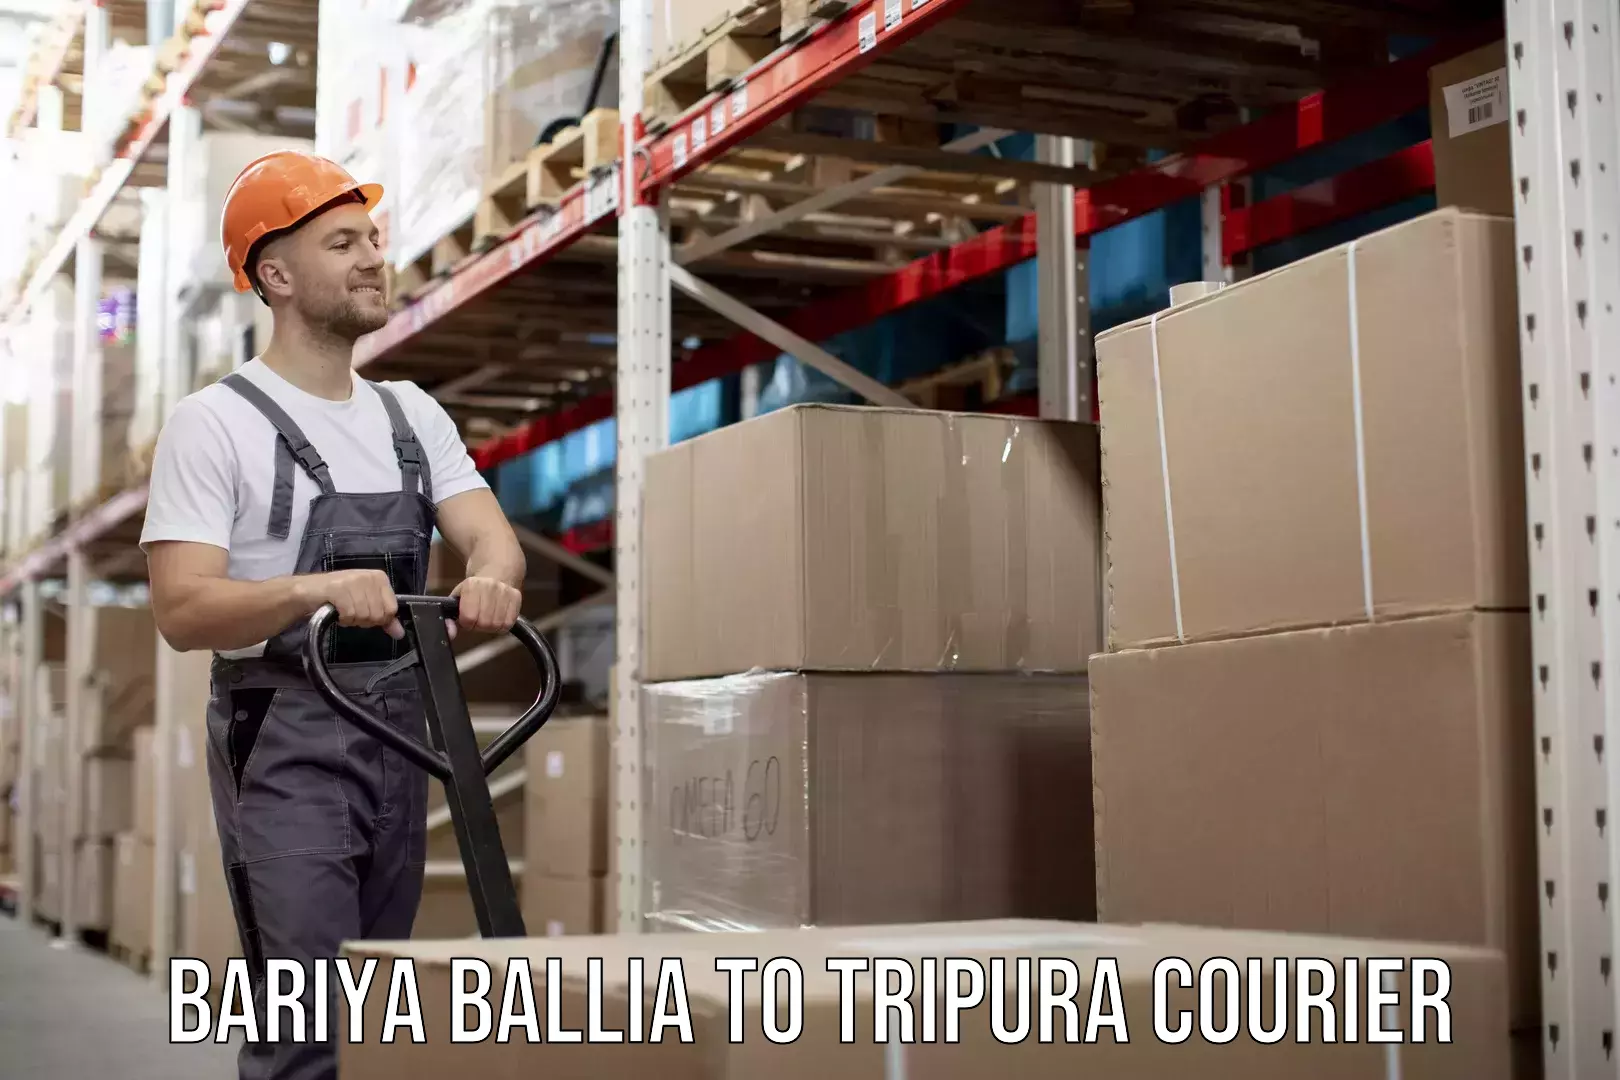 Digital courier platforms Bariya Ballia to Tripura